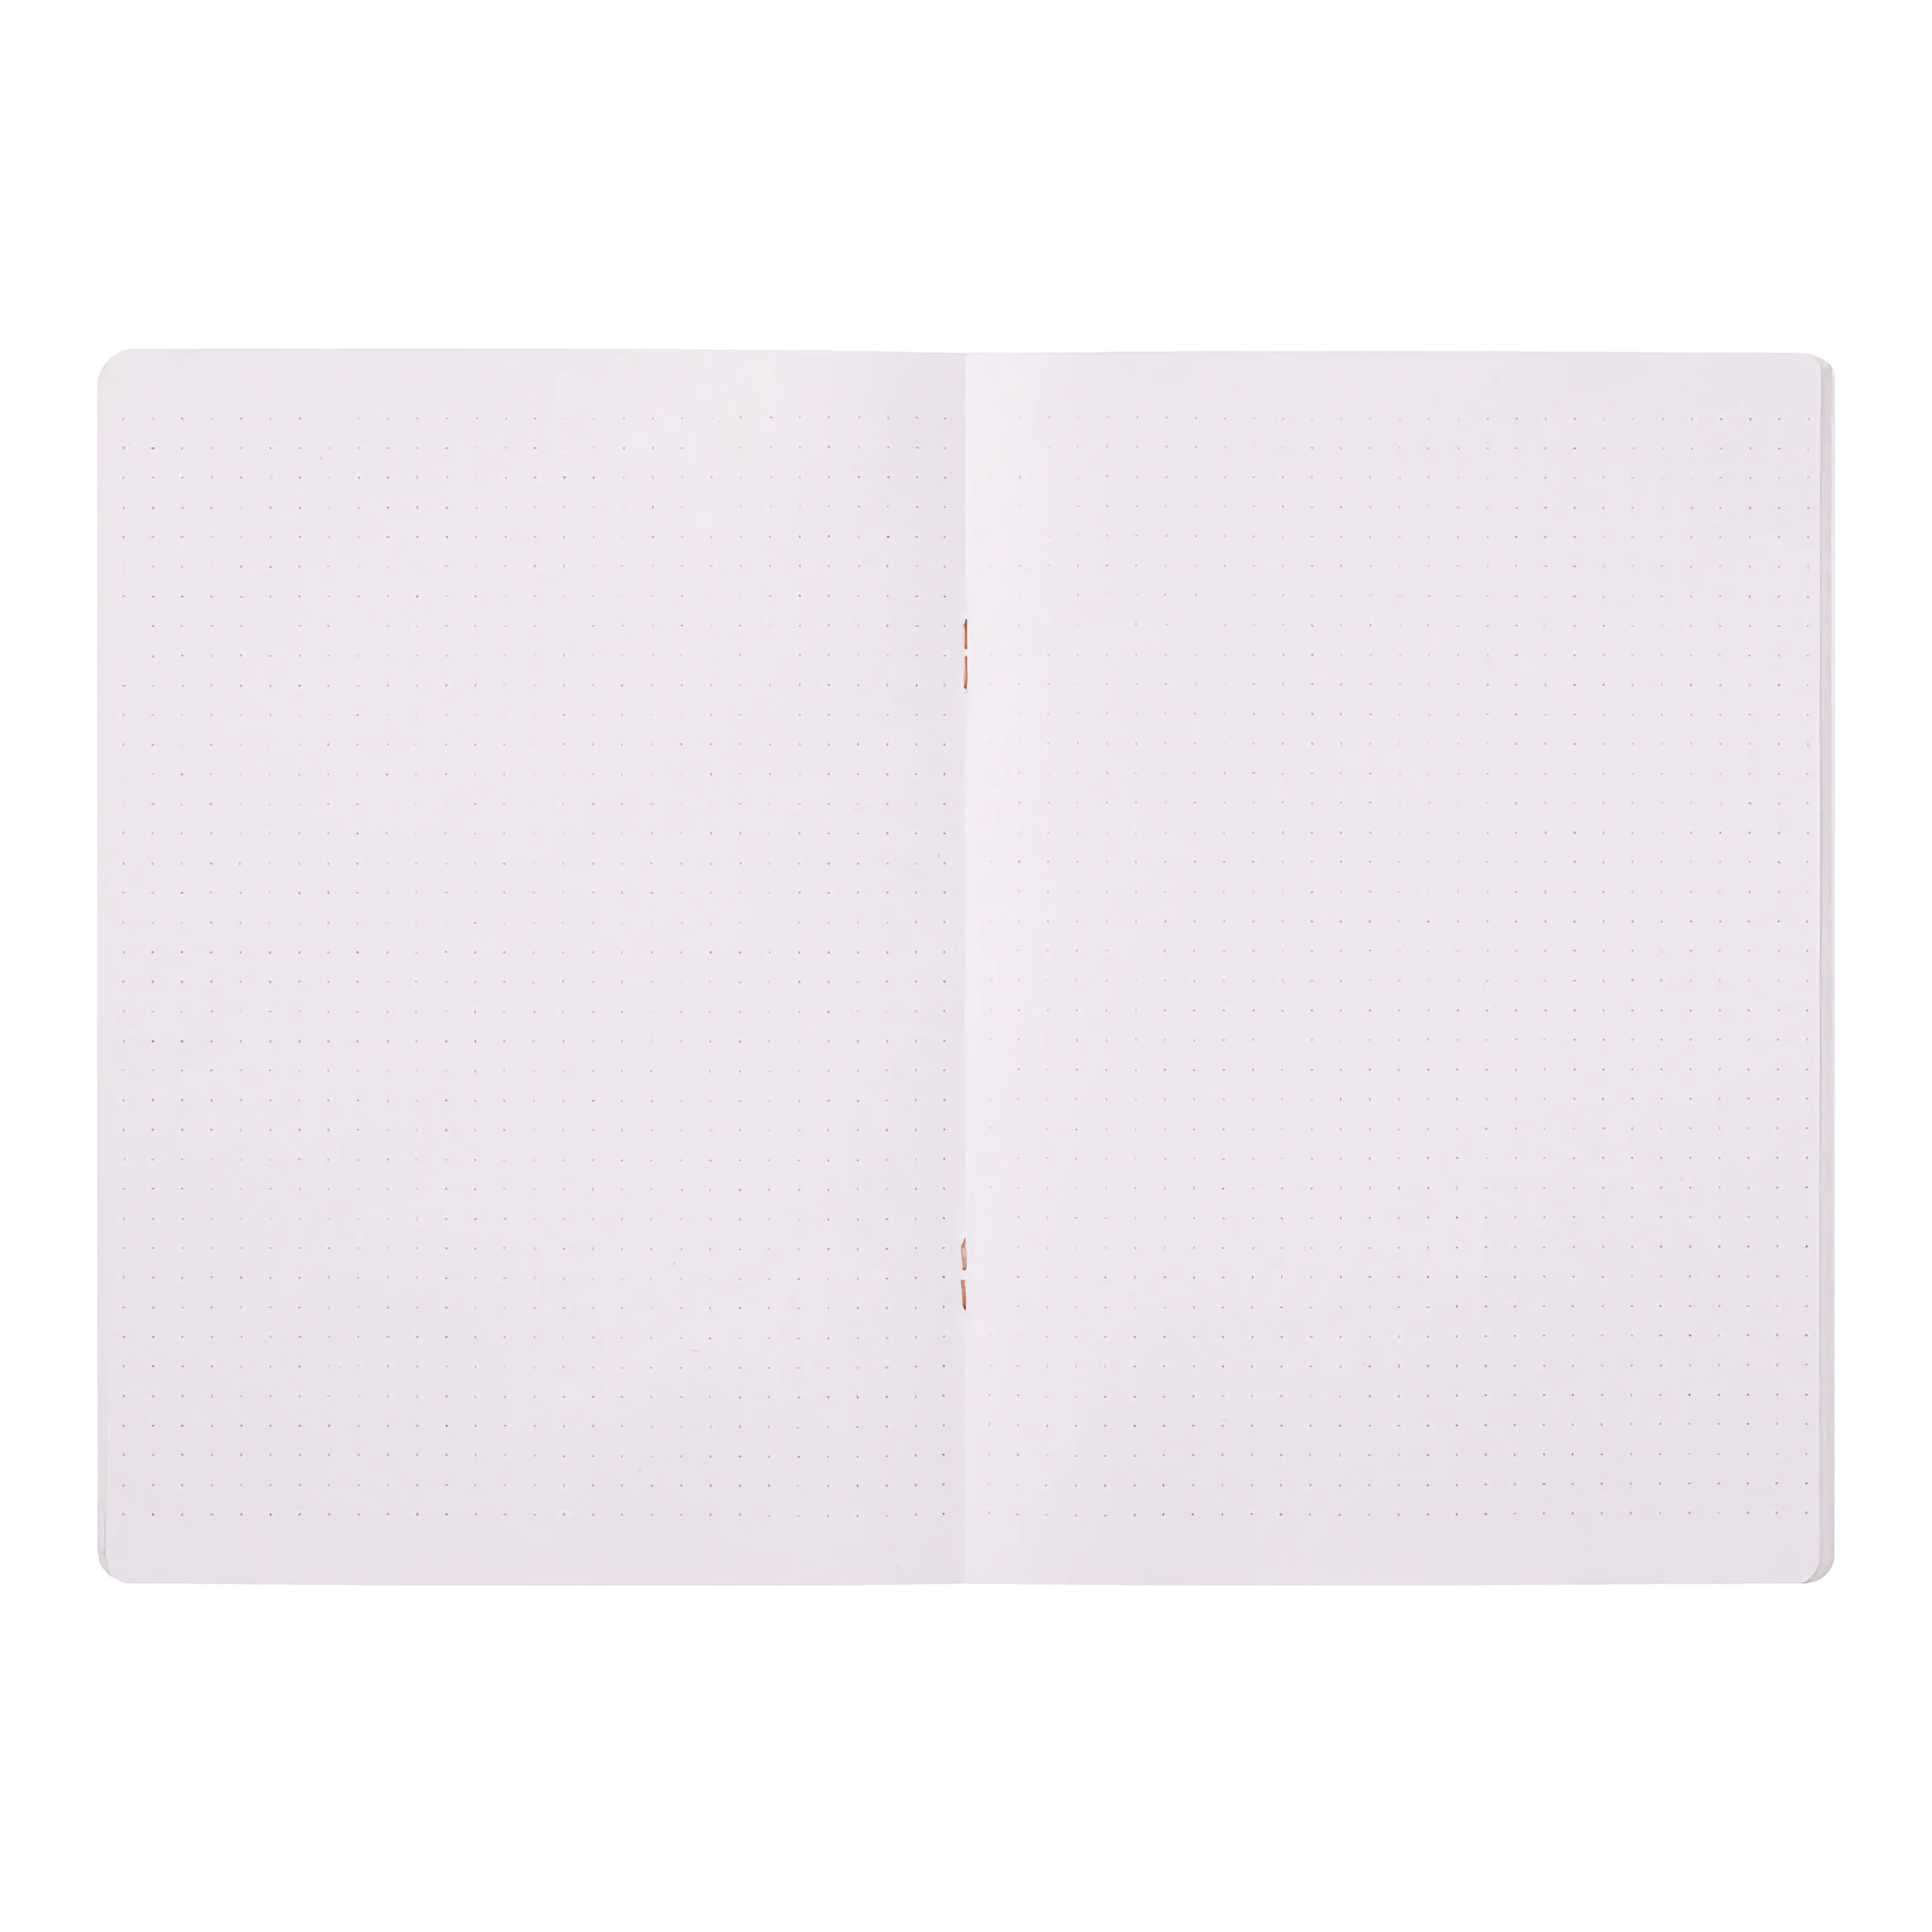 Midori Color Dot Grid Notebook A5 Purple